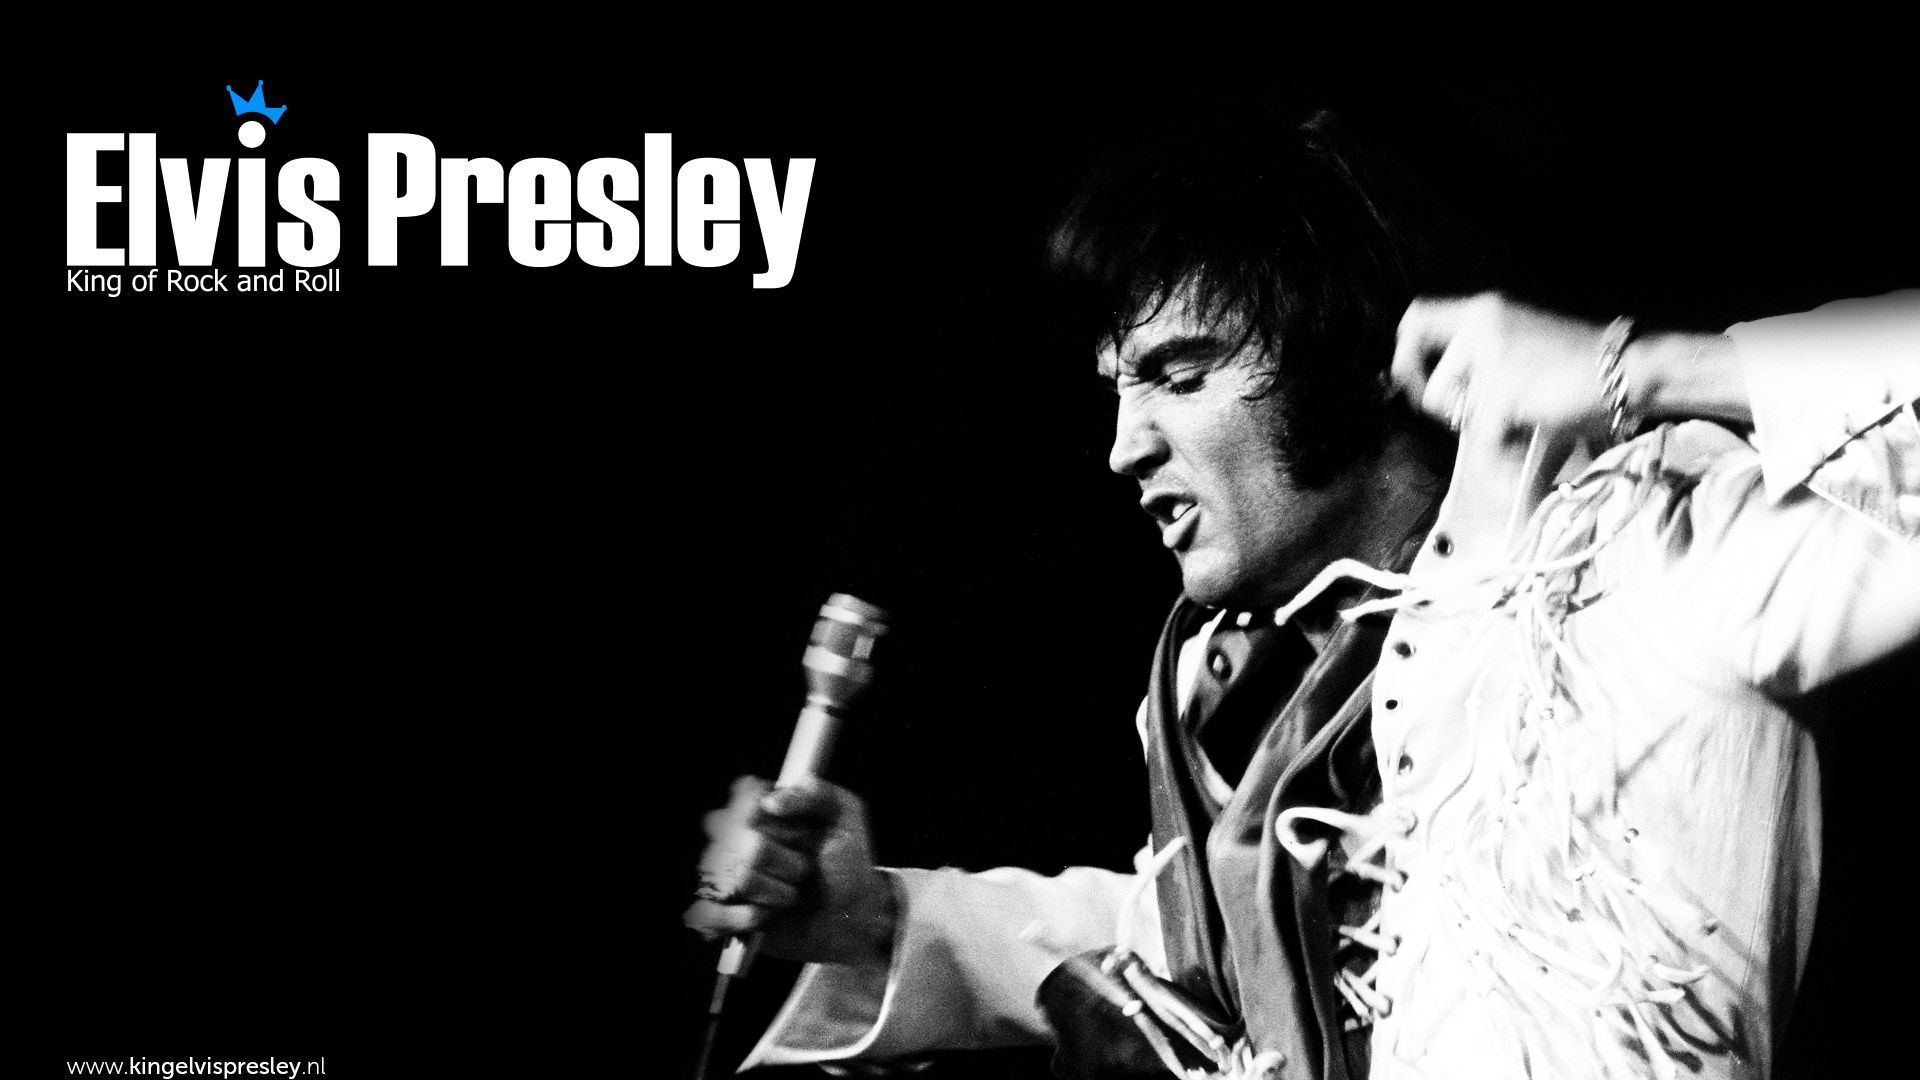 New Elvis Presley Background Wallpaper